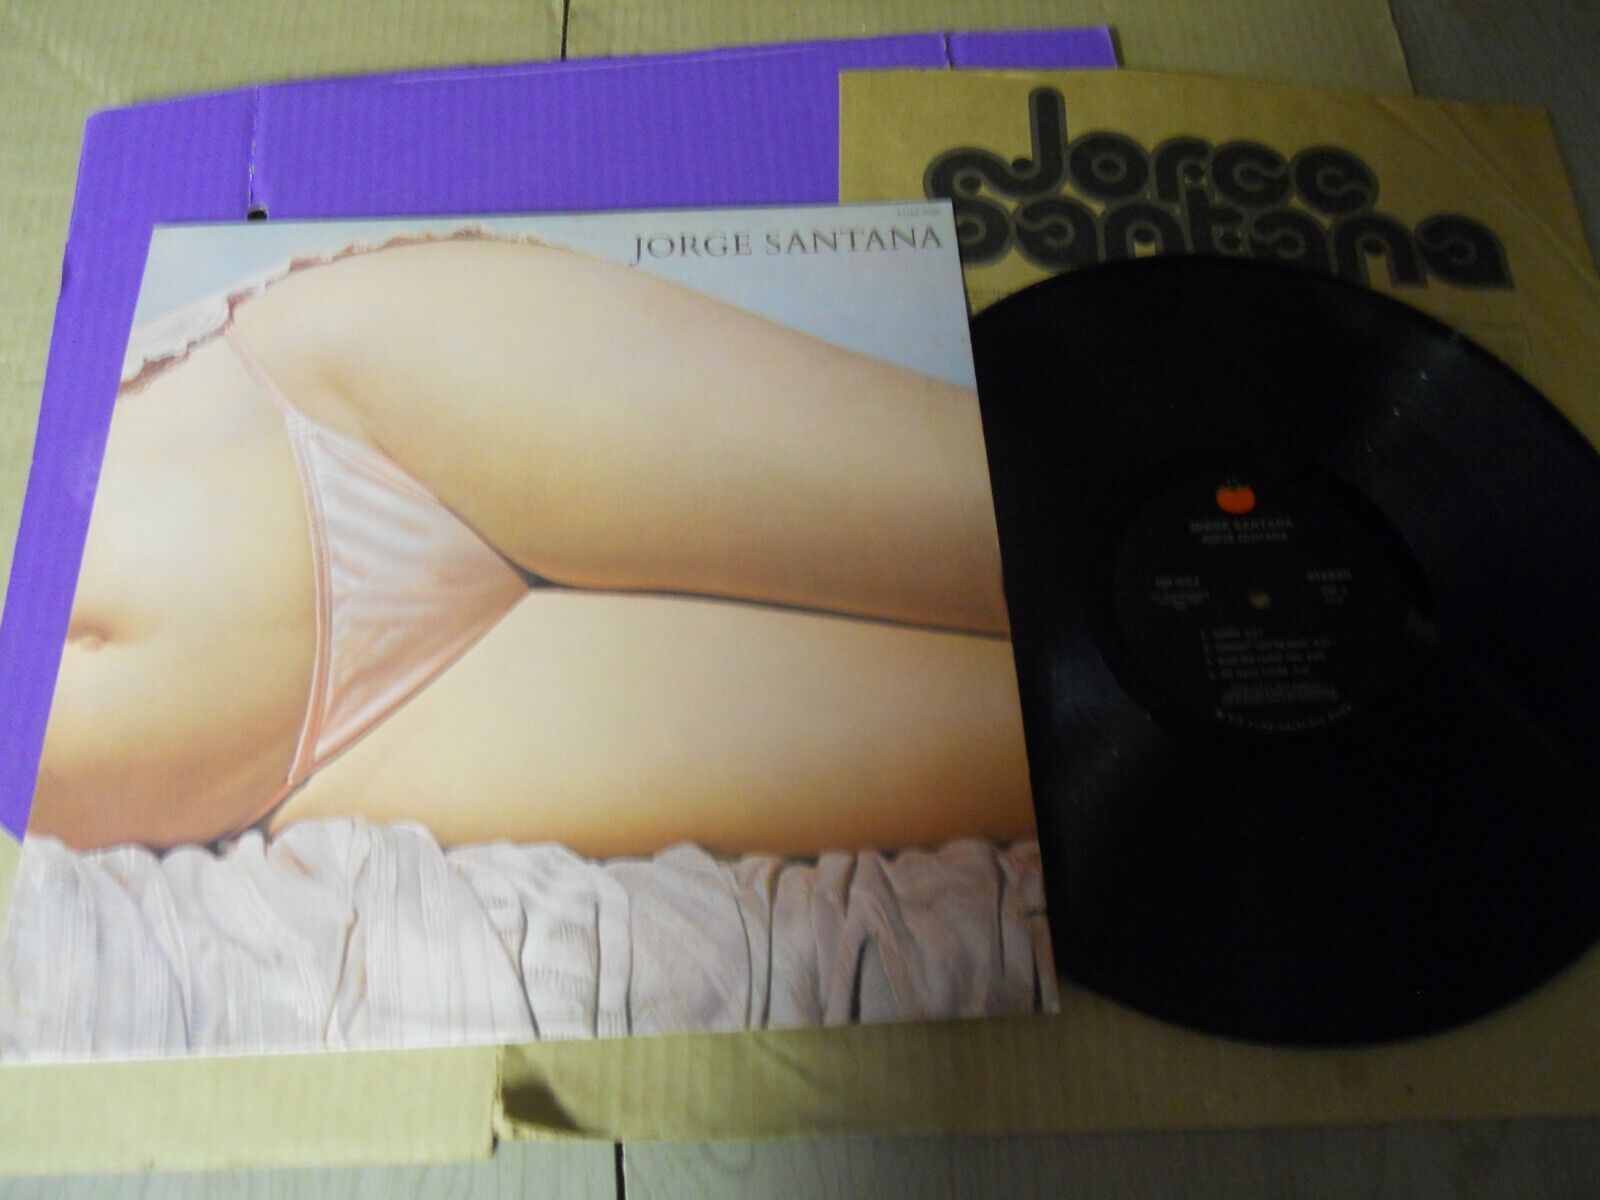 JORGE SANTANA-LATIN SOUL-ROCK LP ON TOMATO-CHEESECAKE COVER